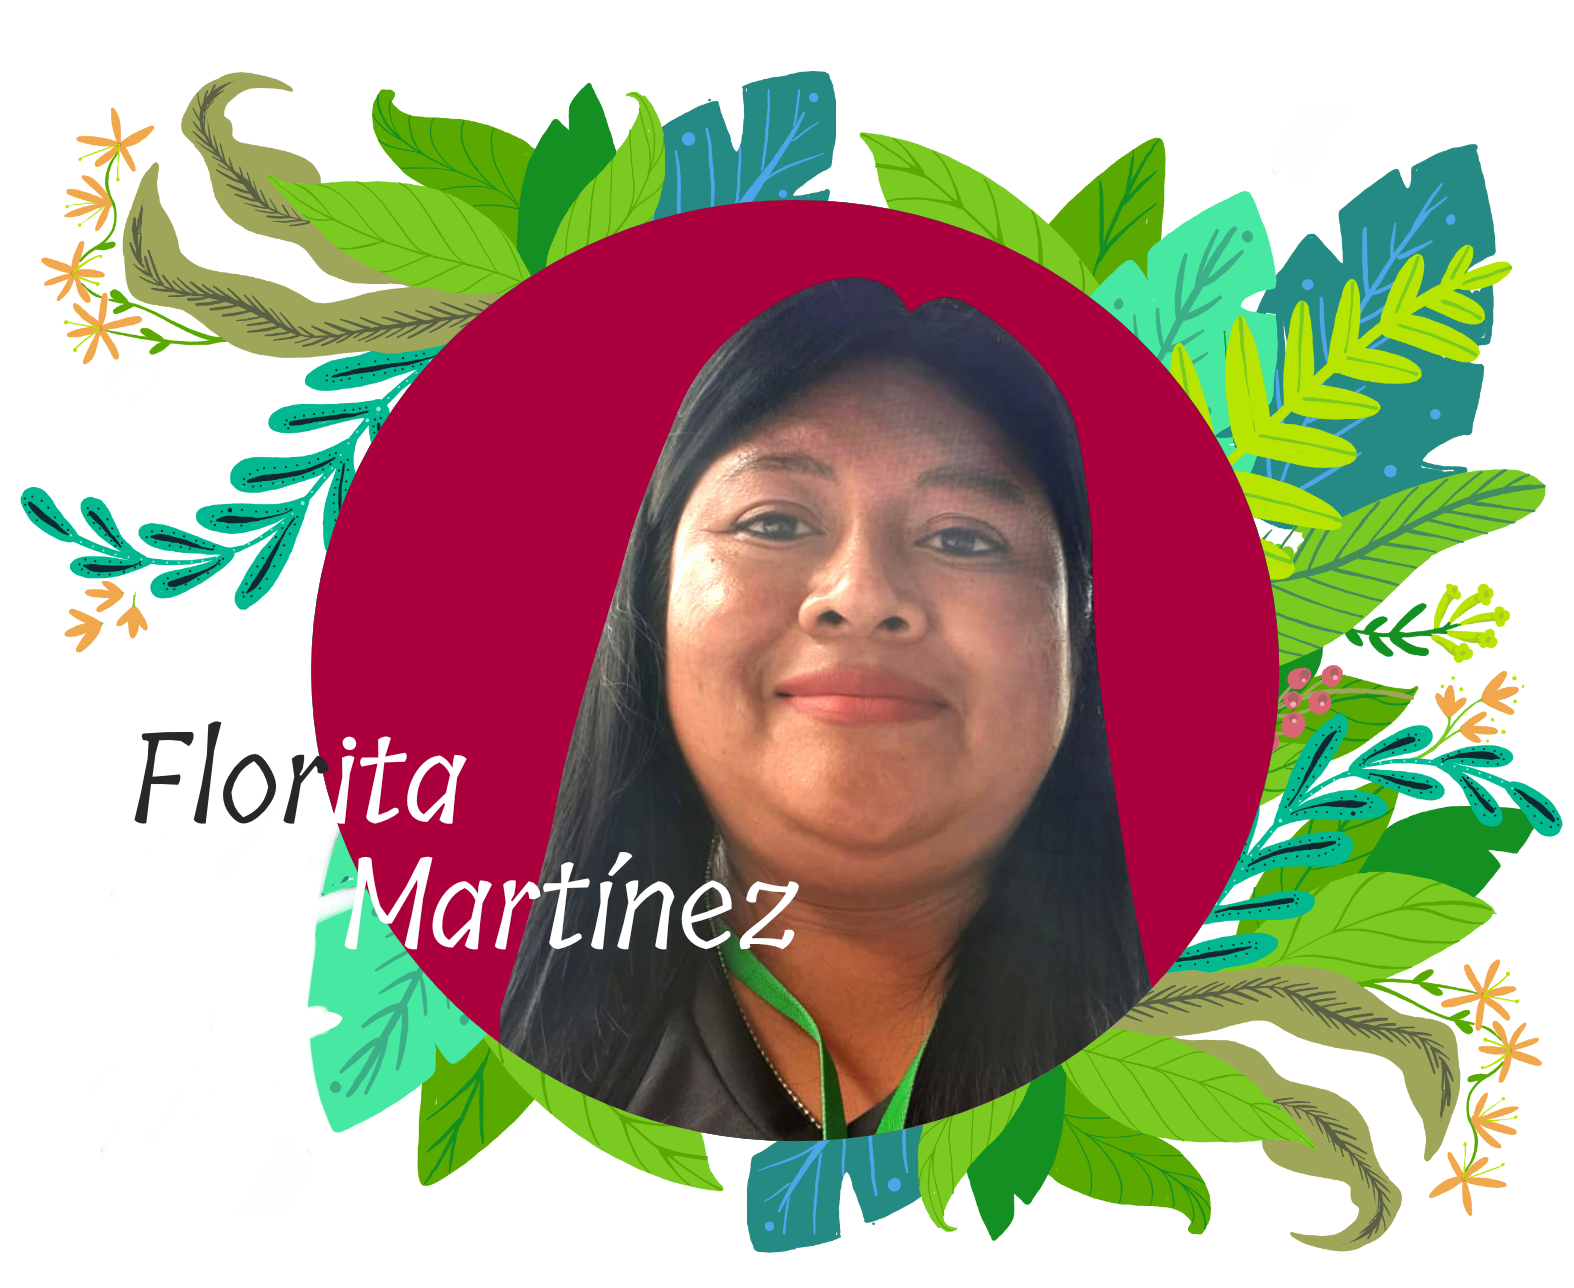 Florita Martínez